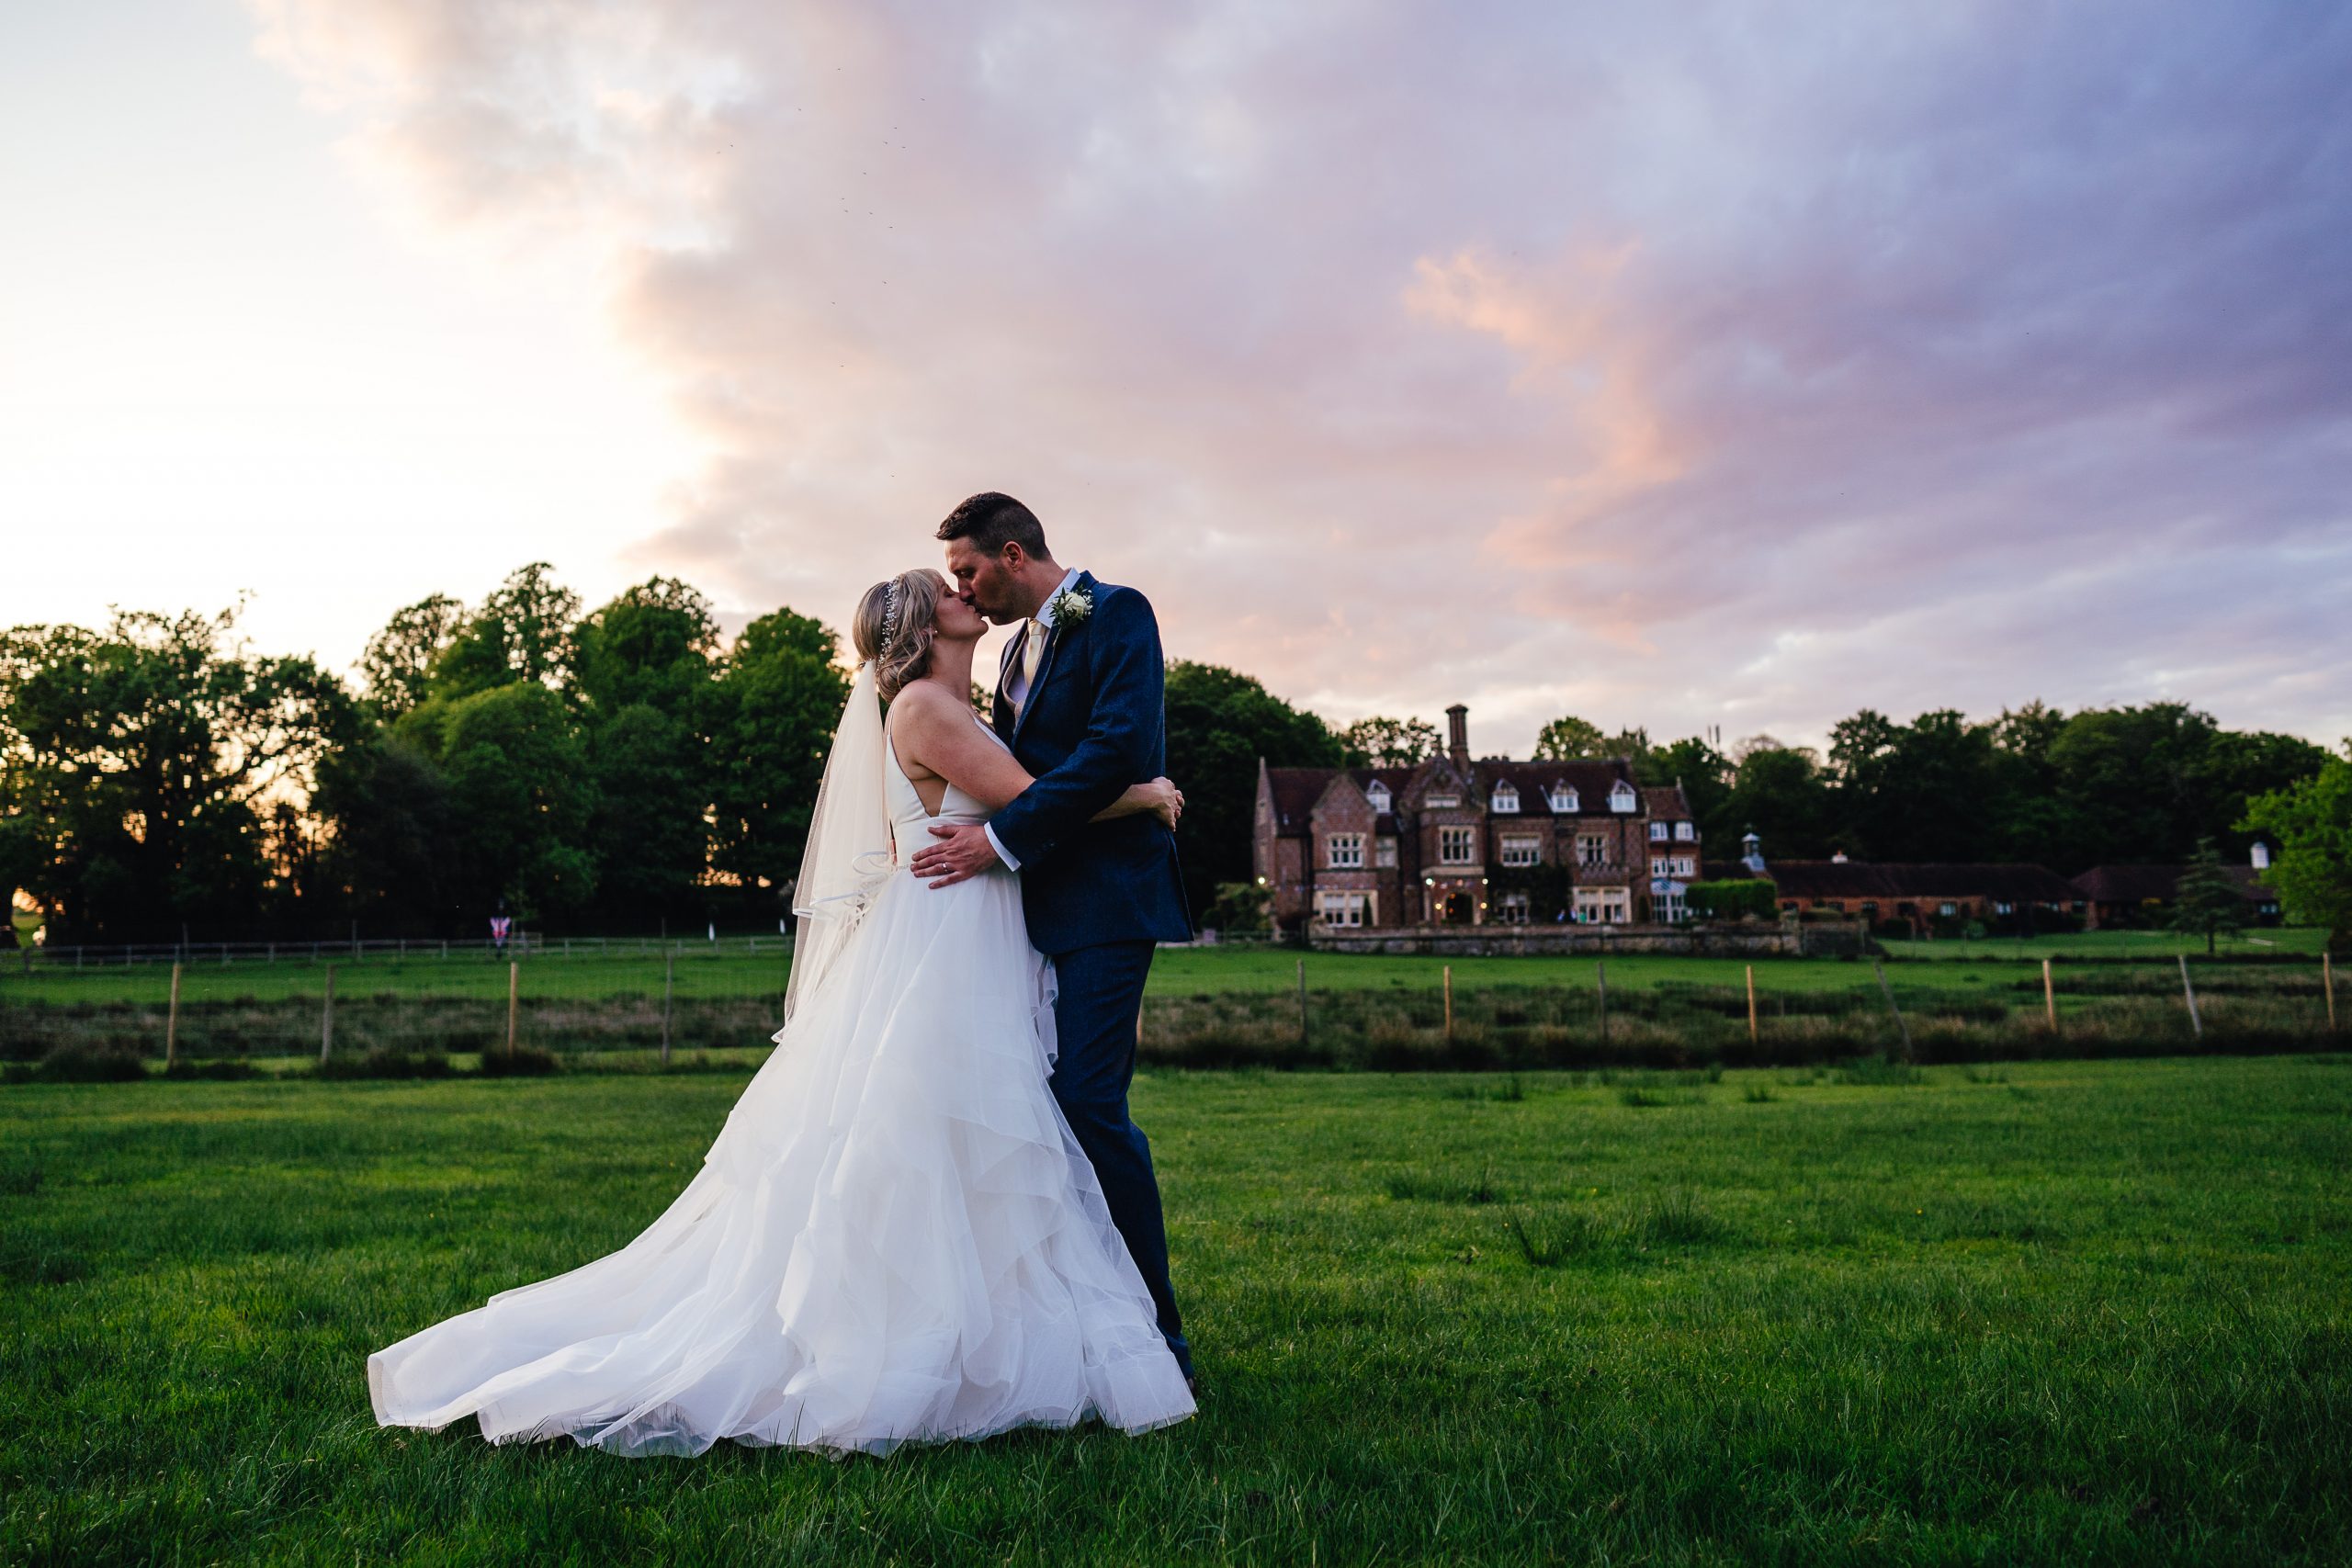 I capture your wedding location as a Devon wedding photographer